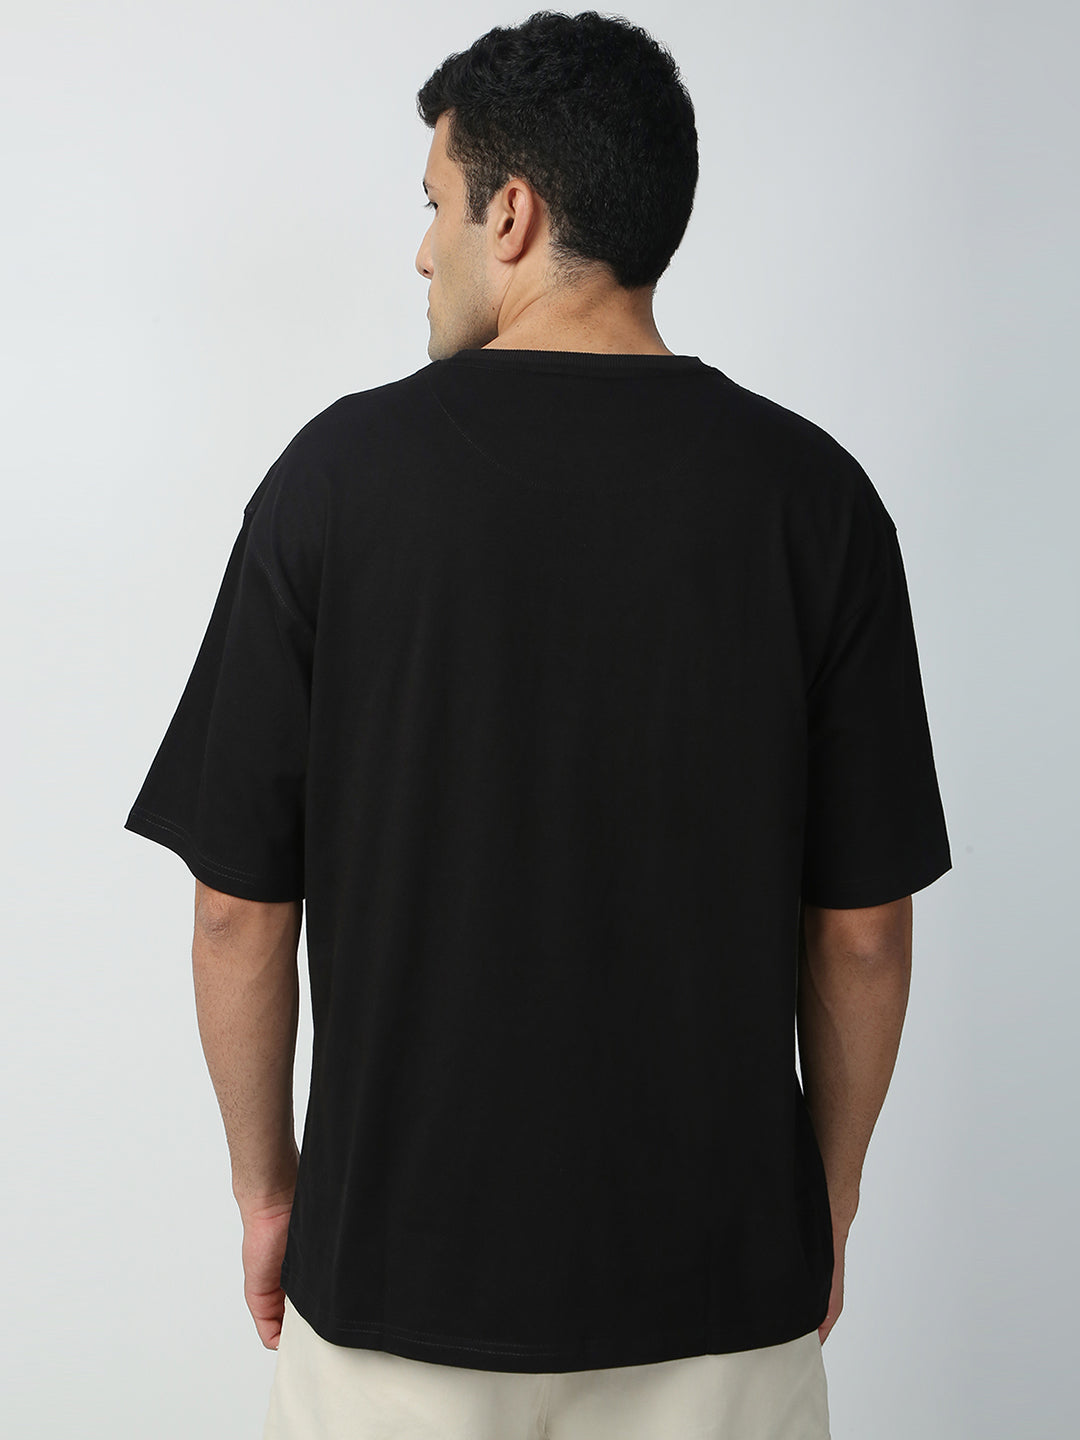 Buy Blamblack Men's Baggy Black Color Printed Round Neck T-Shirt